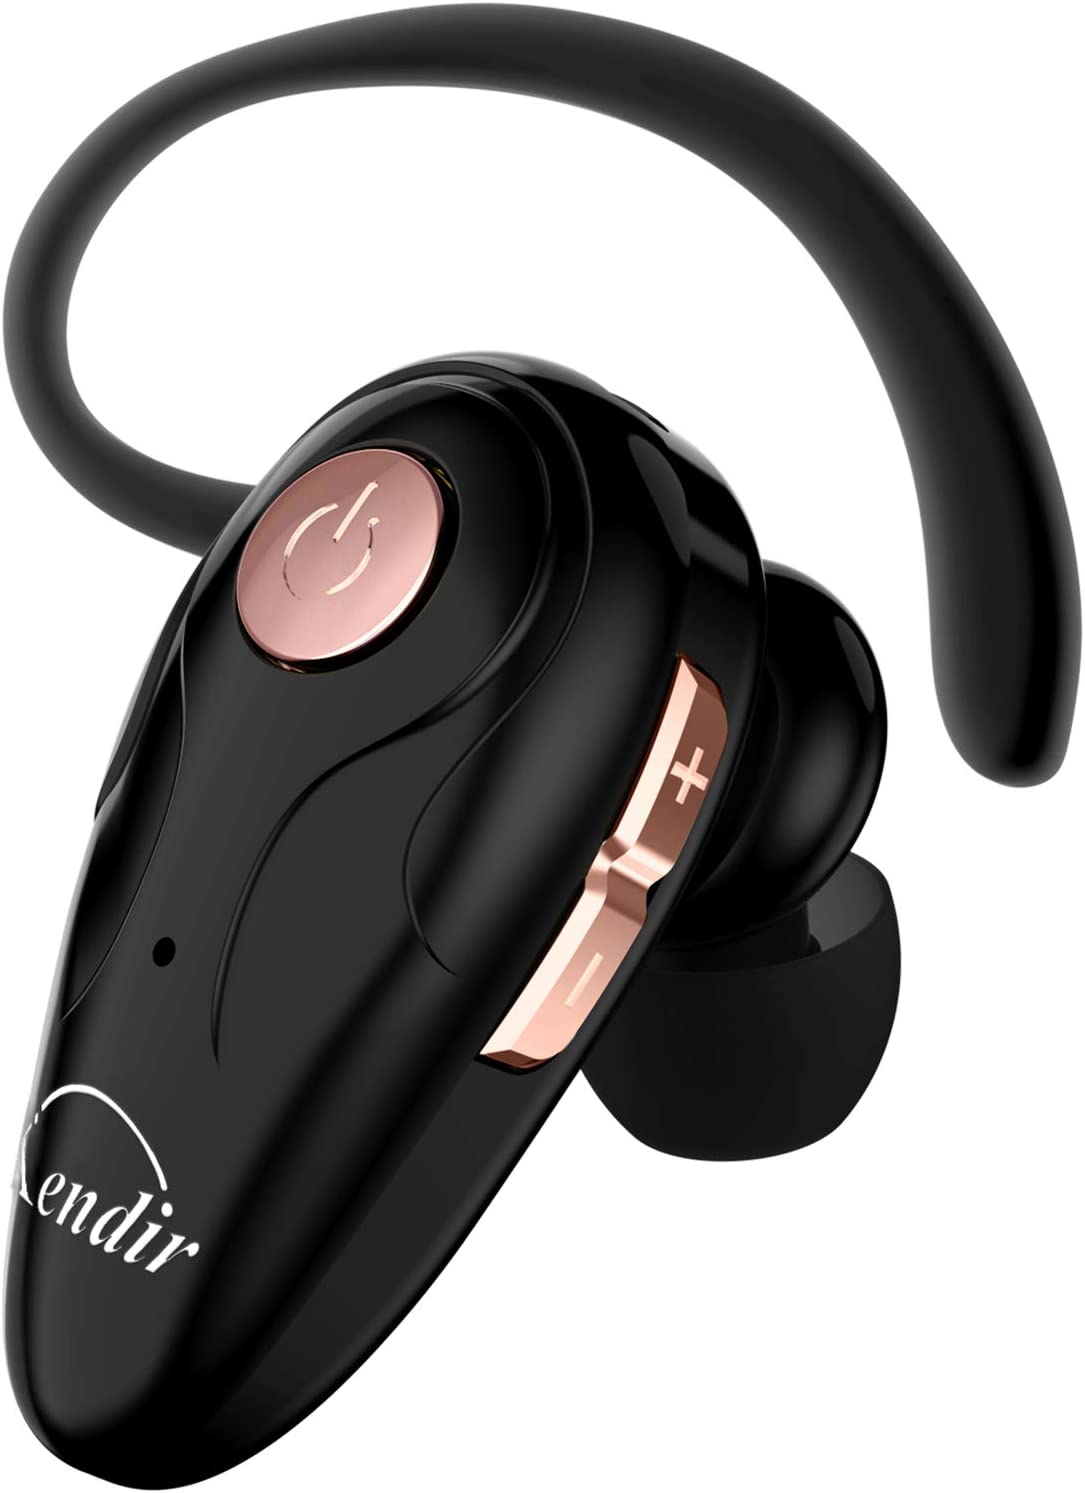 Kendir Bluetooth 헤드셋, 마이크 헤드셋 케이스가 있는 V5.0 초경량 무선 헤드폰 휴대폰 이어피스, 볼륨 컨트롤, 핸즈프리 이어버드, Android/iPhone/스마트폰/노트북과 호환